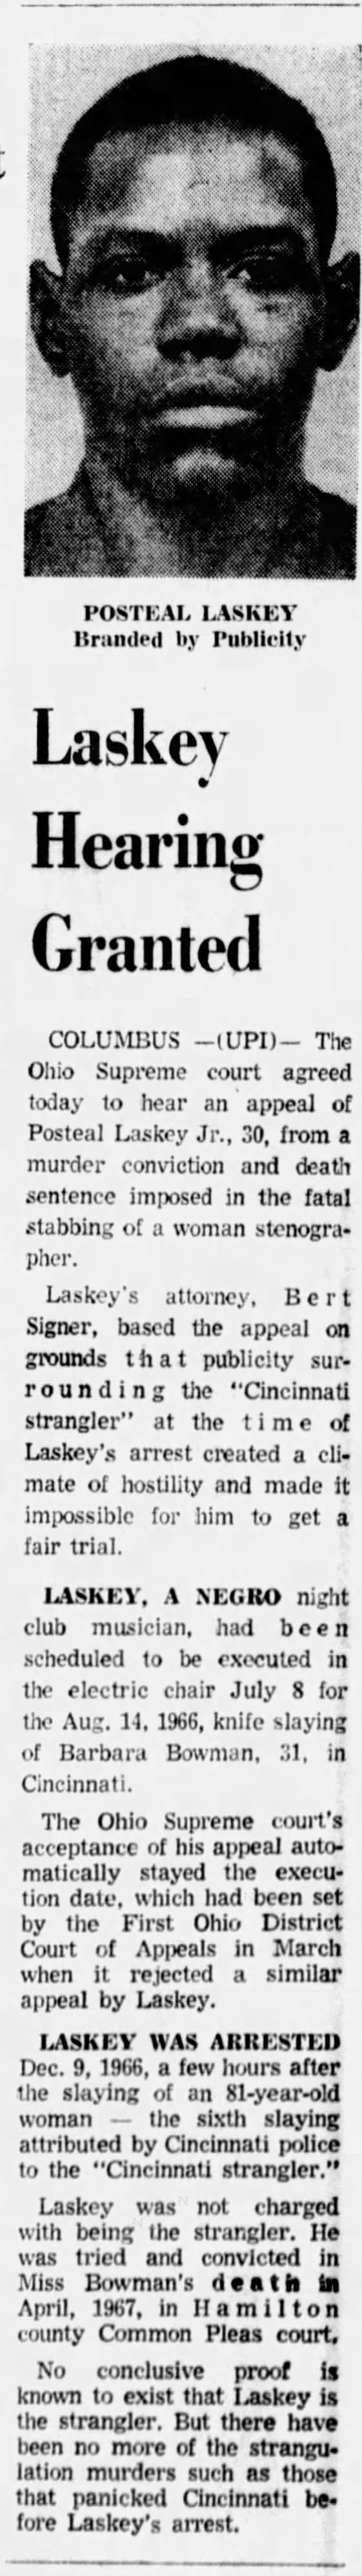 Cincinnati Strangler - Posteal Laskey - 12 Jun 1968